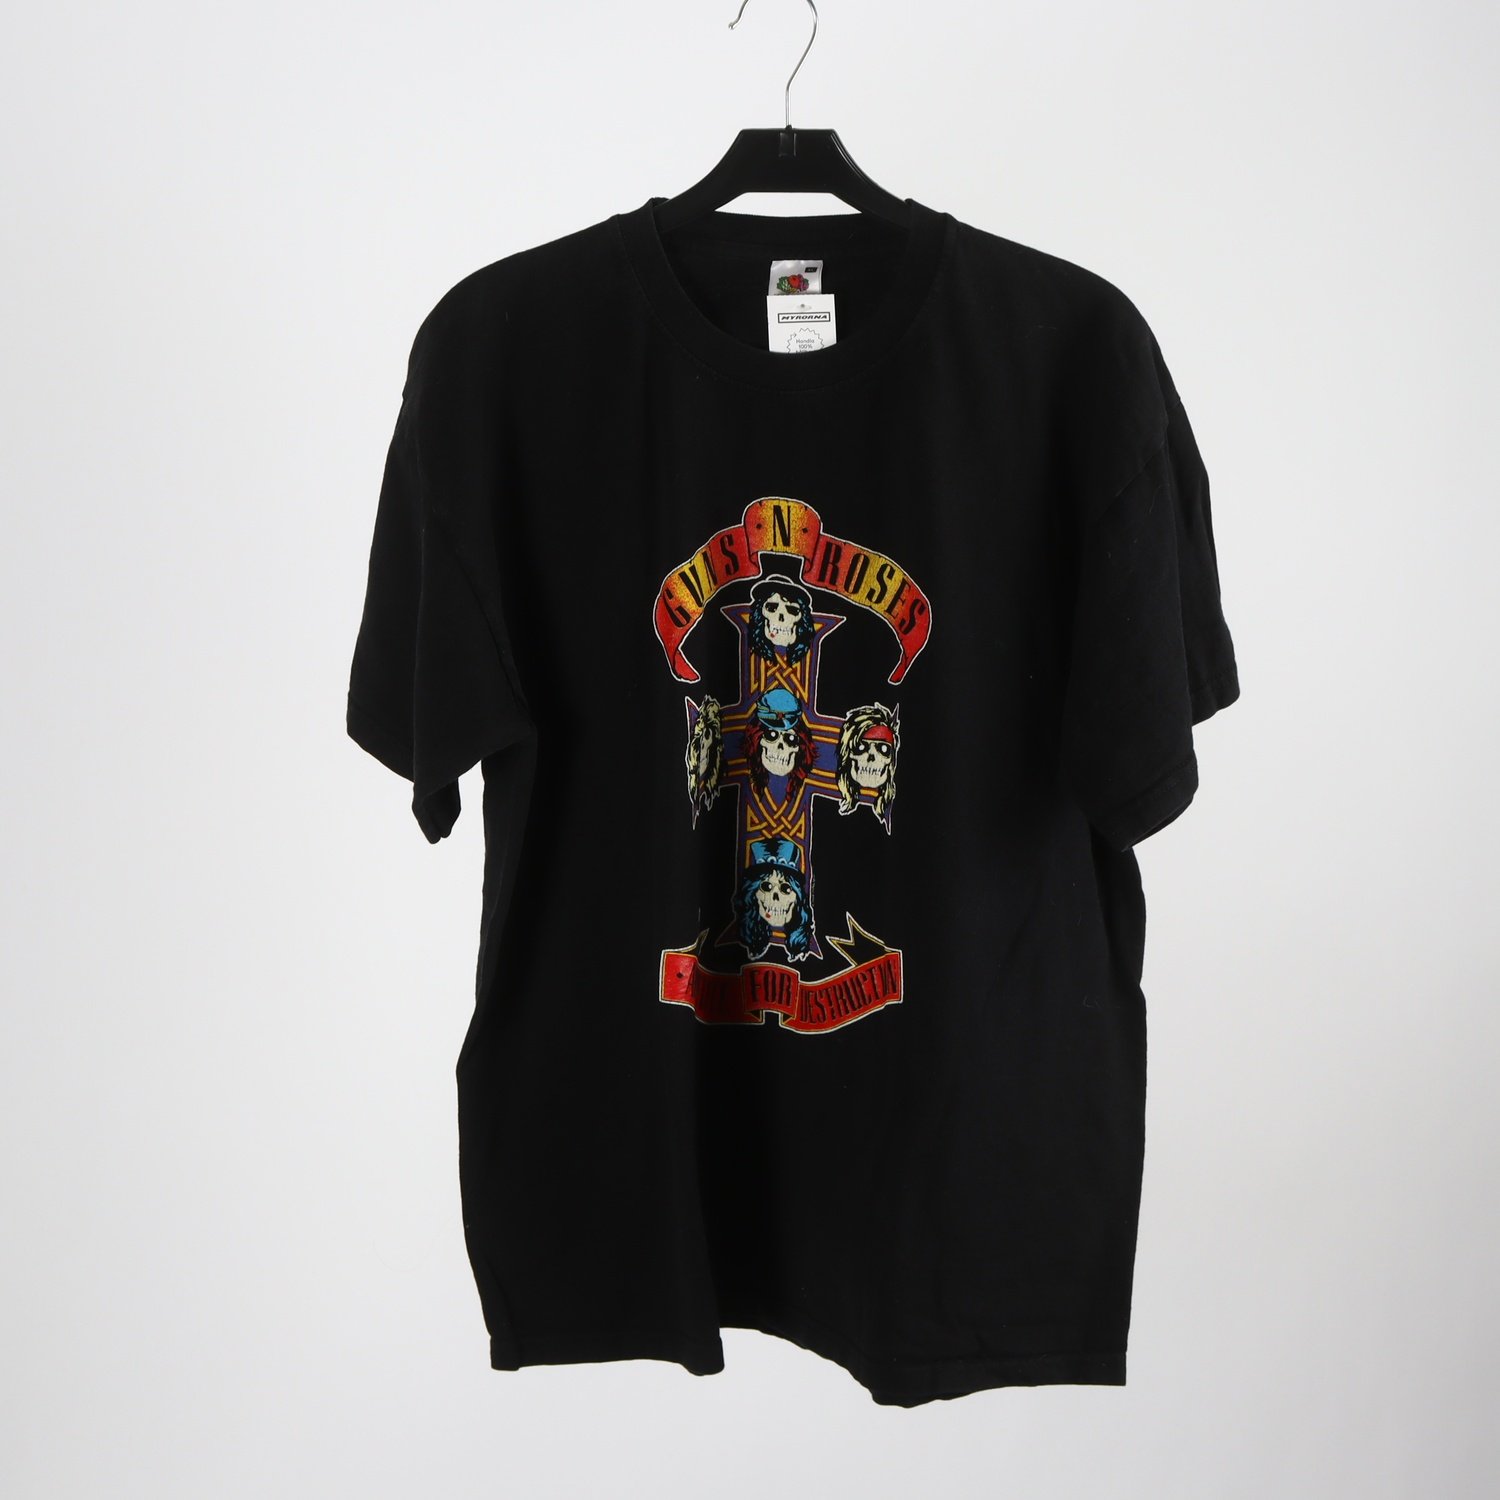 T-Shirt, Fruit Of the loom, Guns’n’Roses, svart, stl. XL